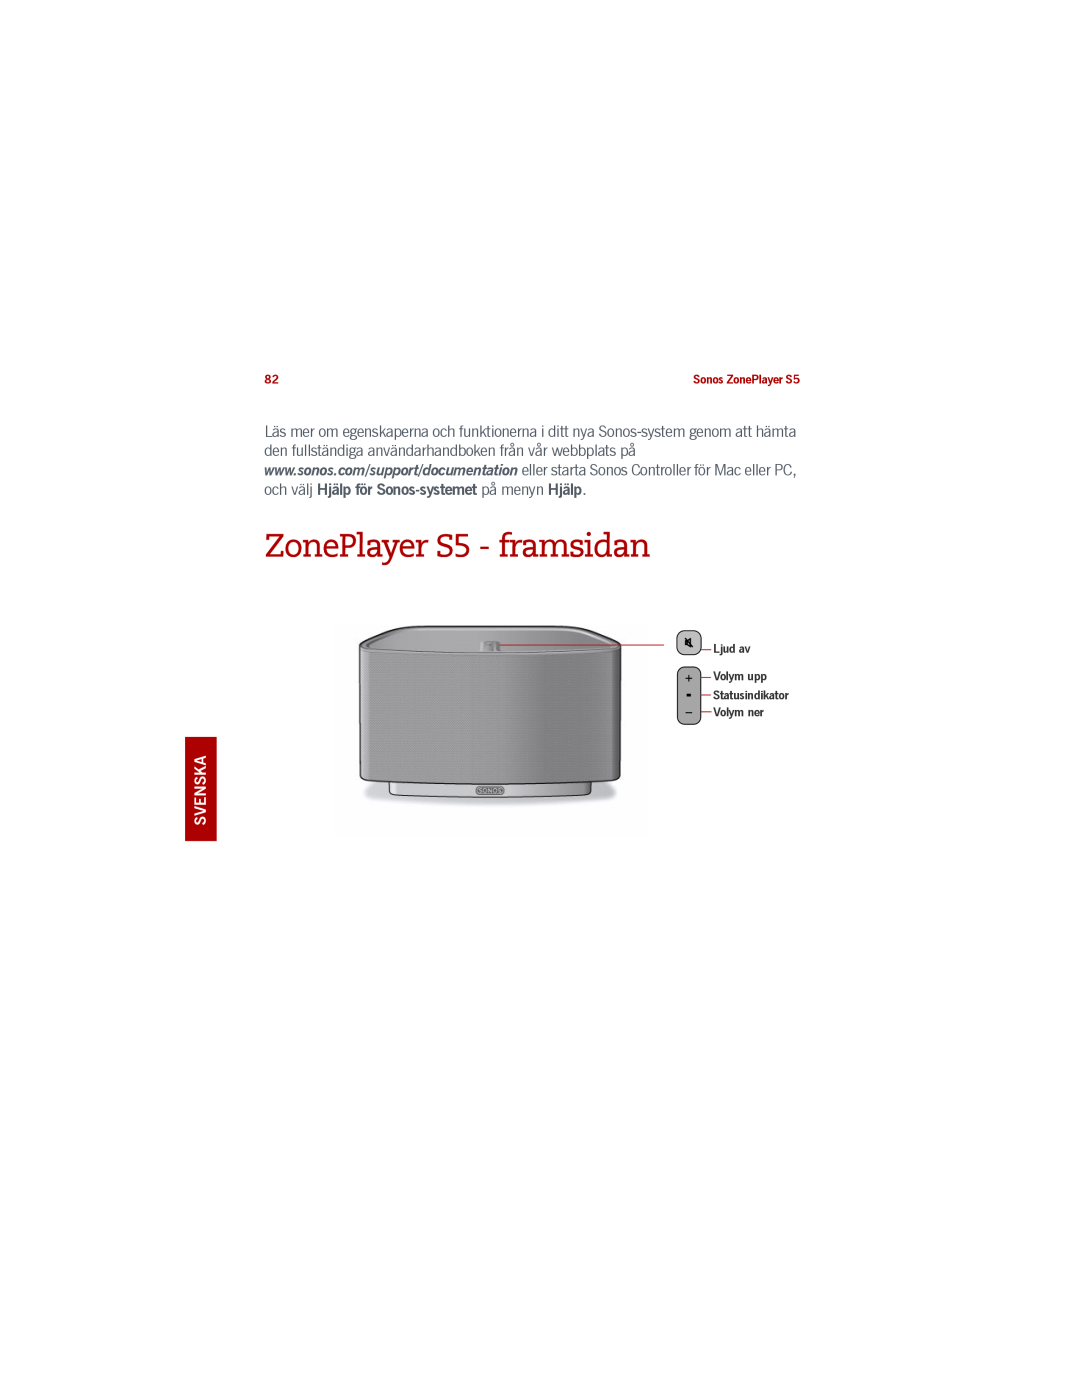 Sonos manual ZonePlayer S5 - framsidan, Svenska, Ljud av Volym upp Statusindikator Volym ner, Sonos ZonePlayer S5 